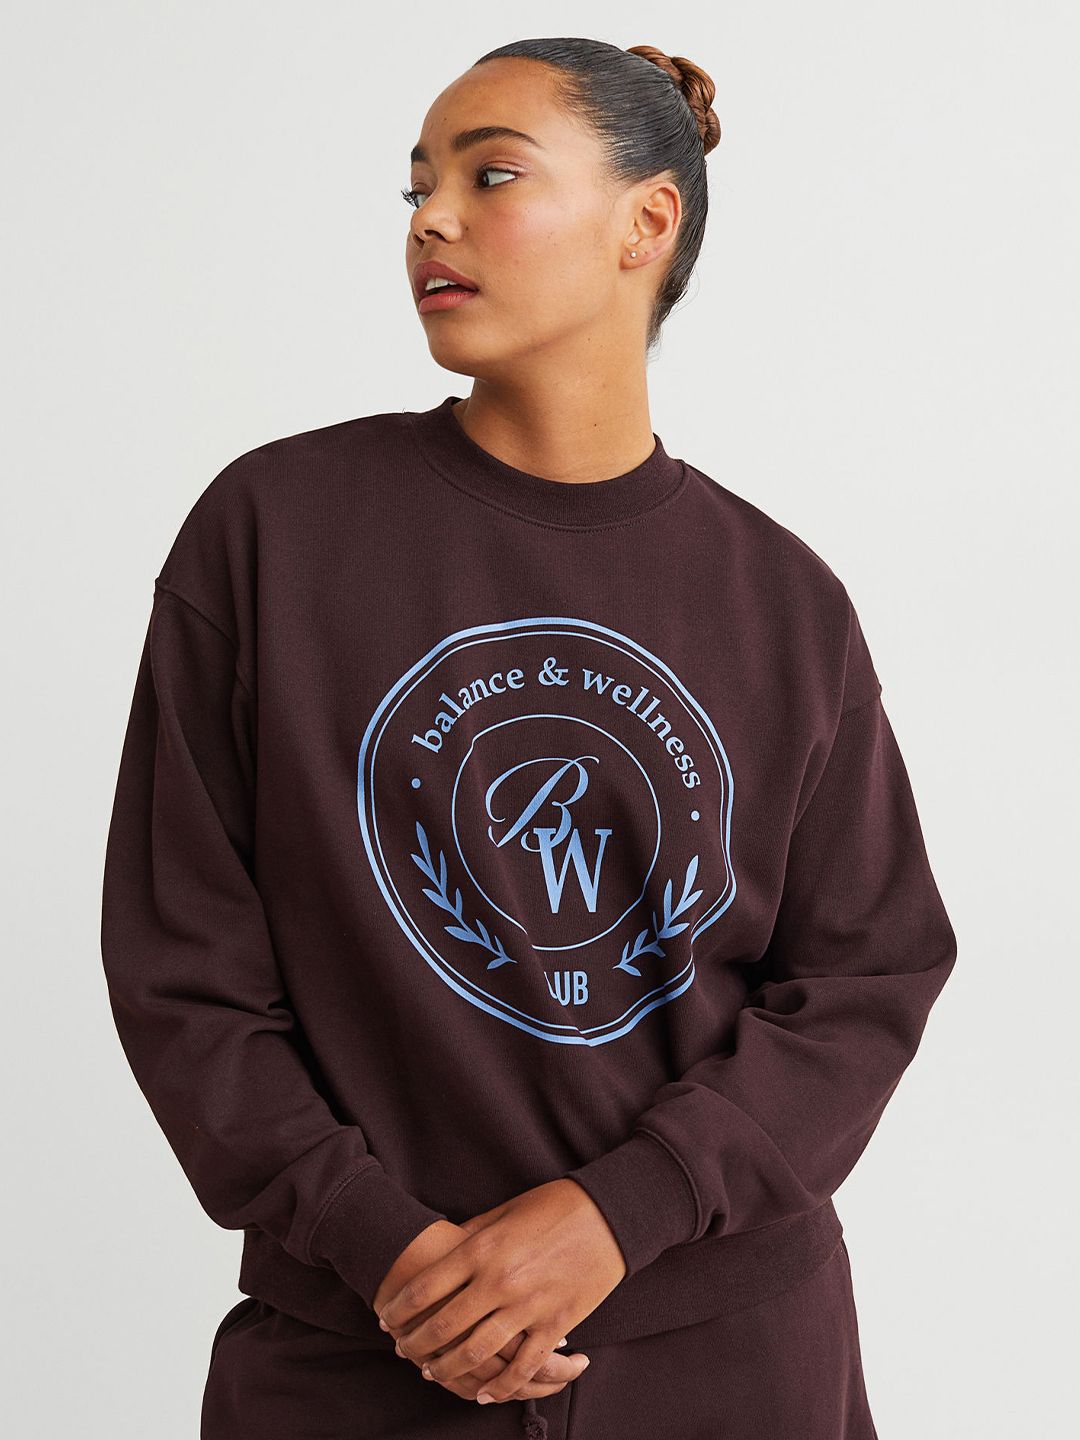 H&M Brown Printed Sweatshirt Price in India